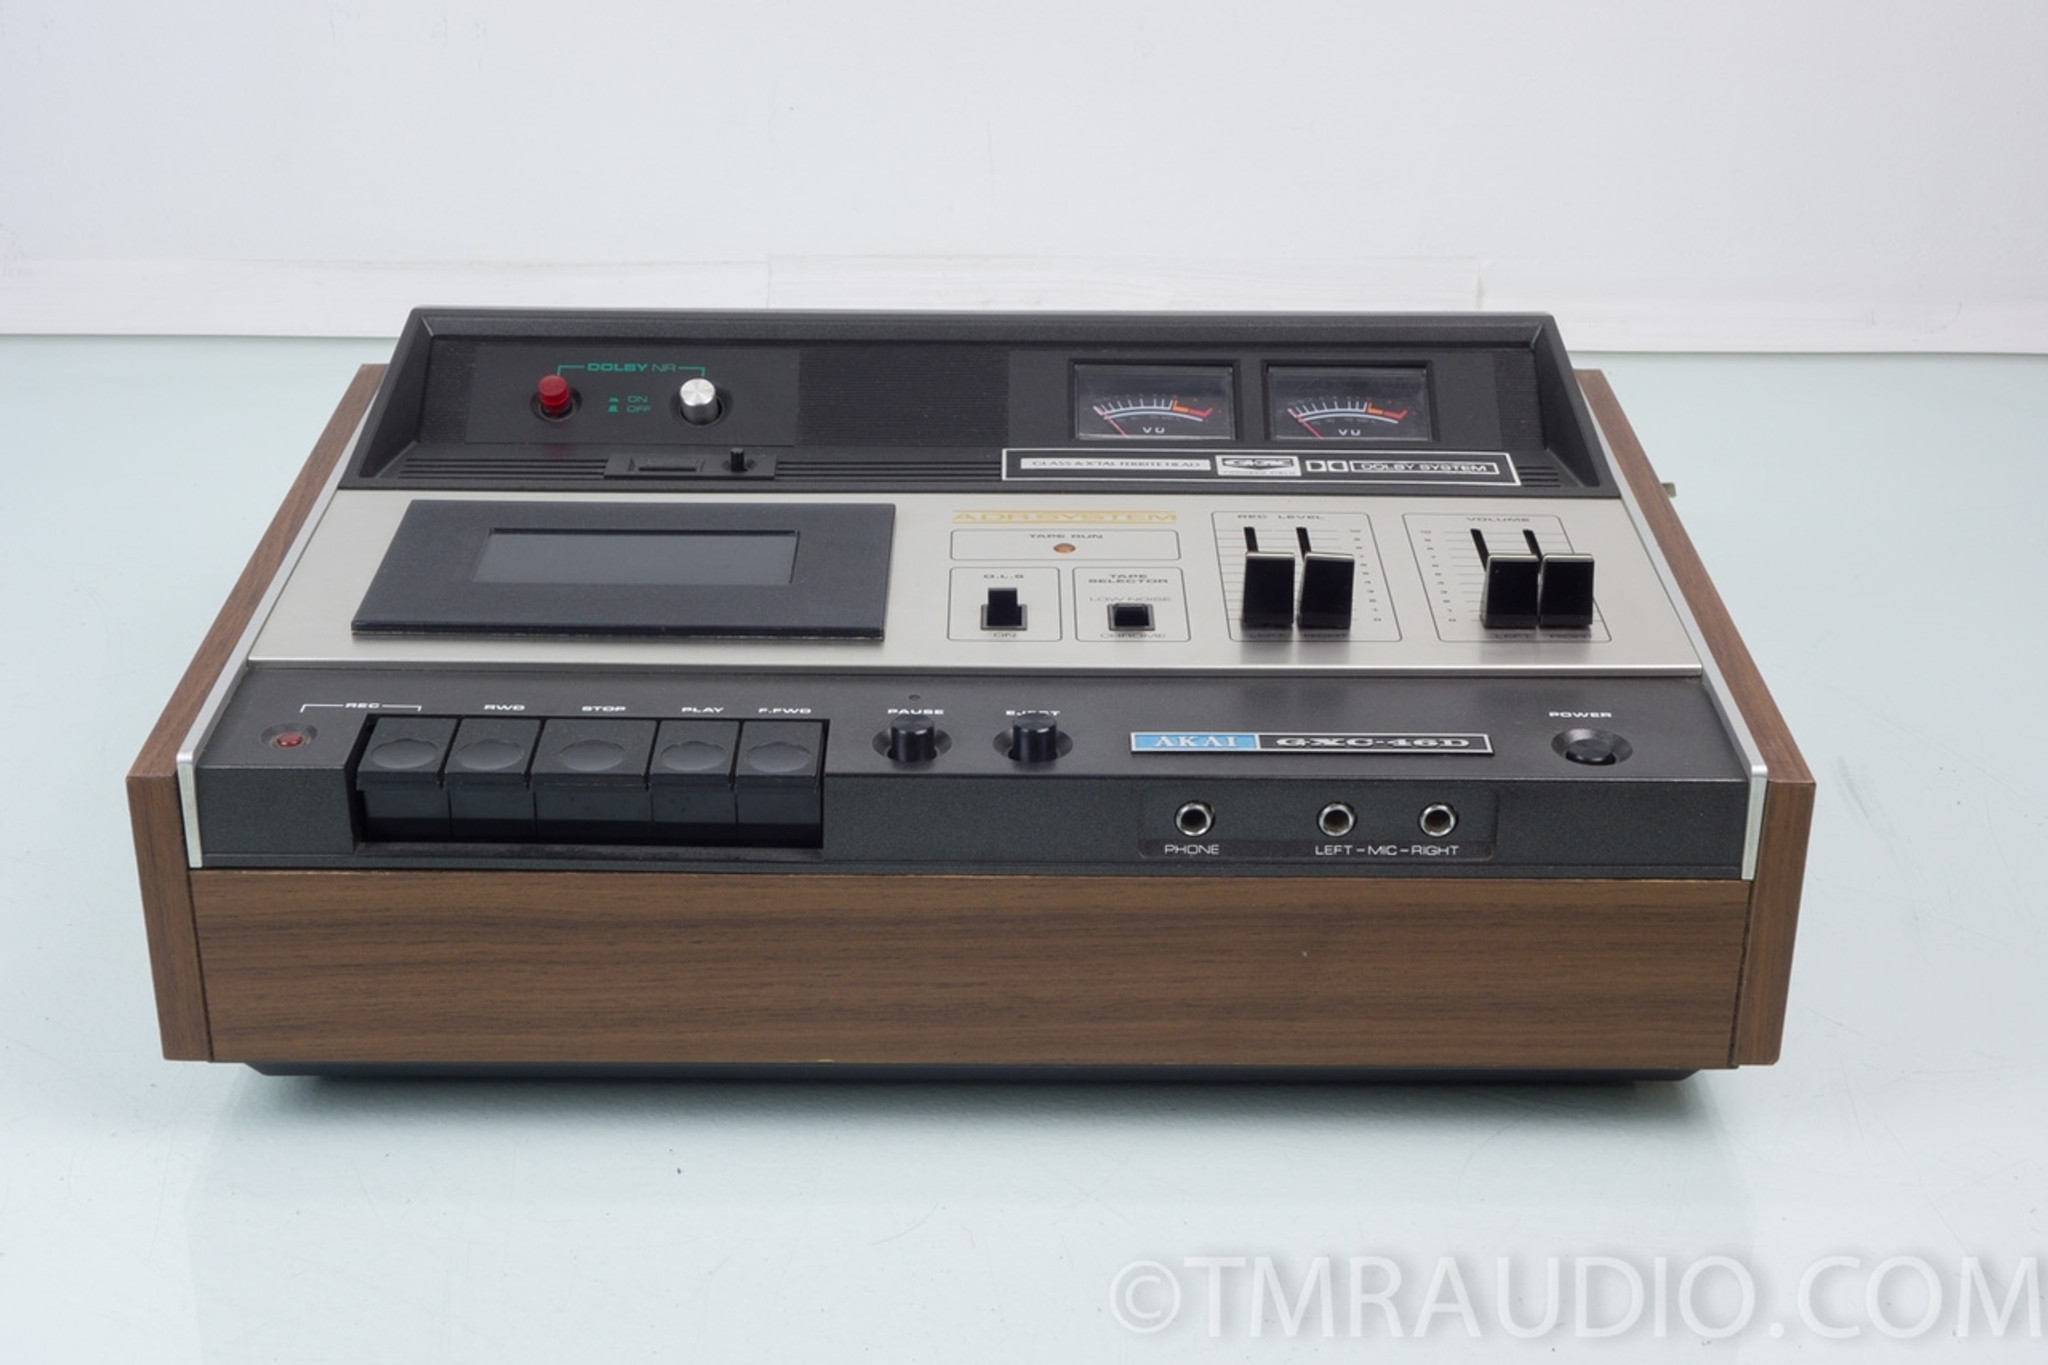 Akai GXC-46D Vintage Stereo Cassette Deck / Tape Recorder